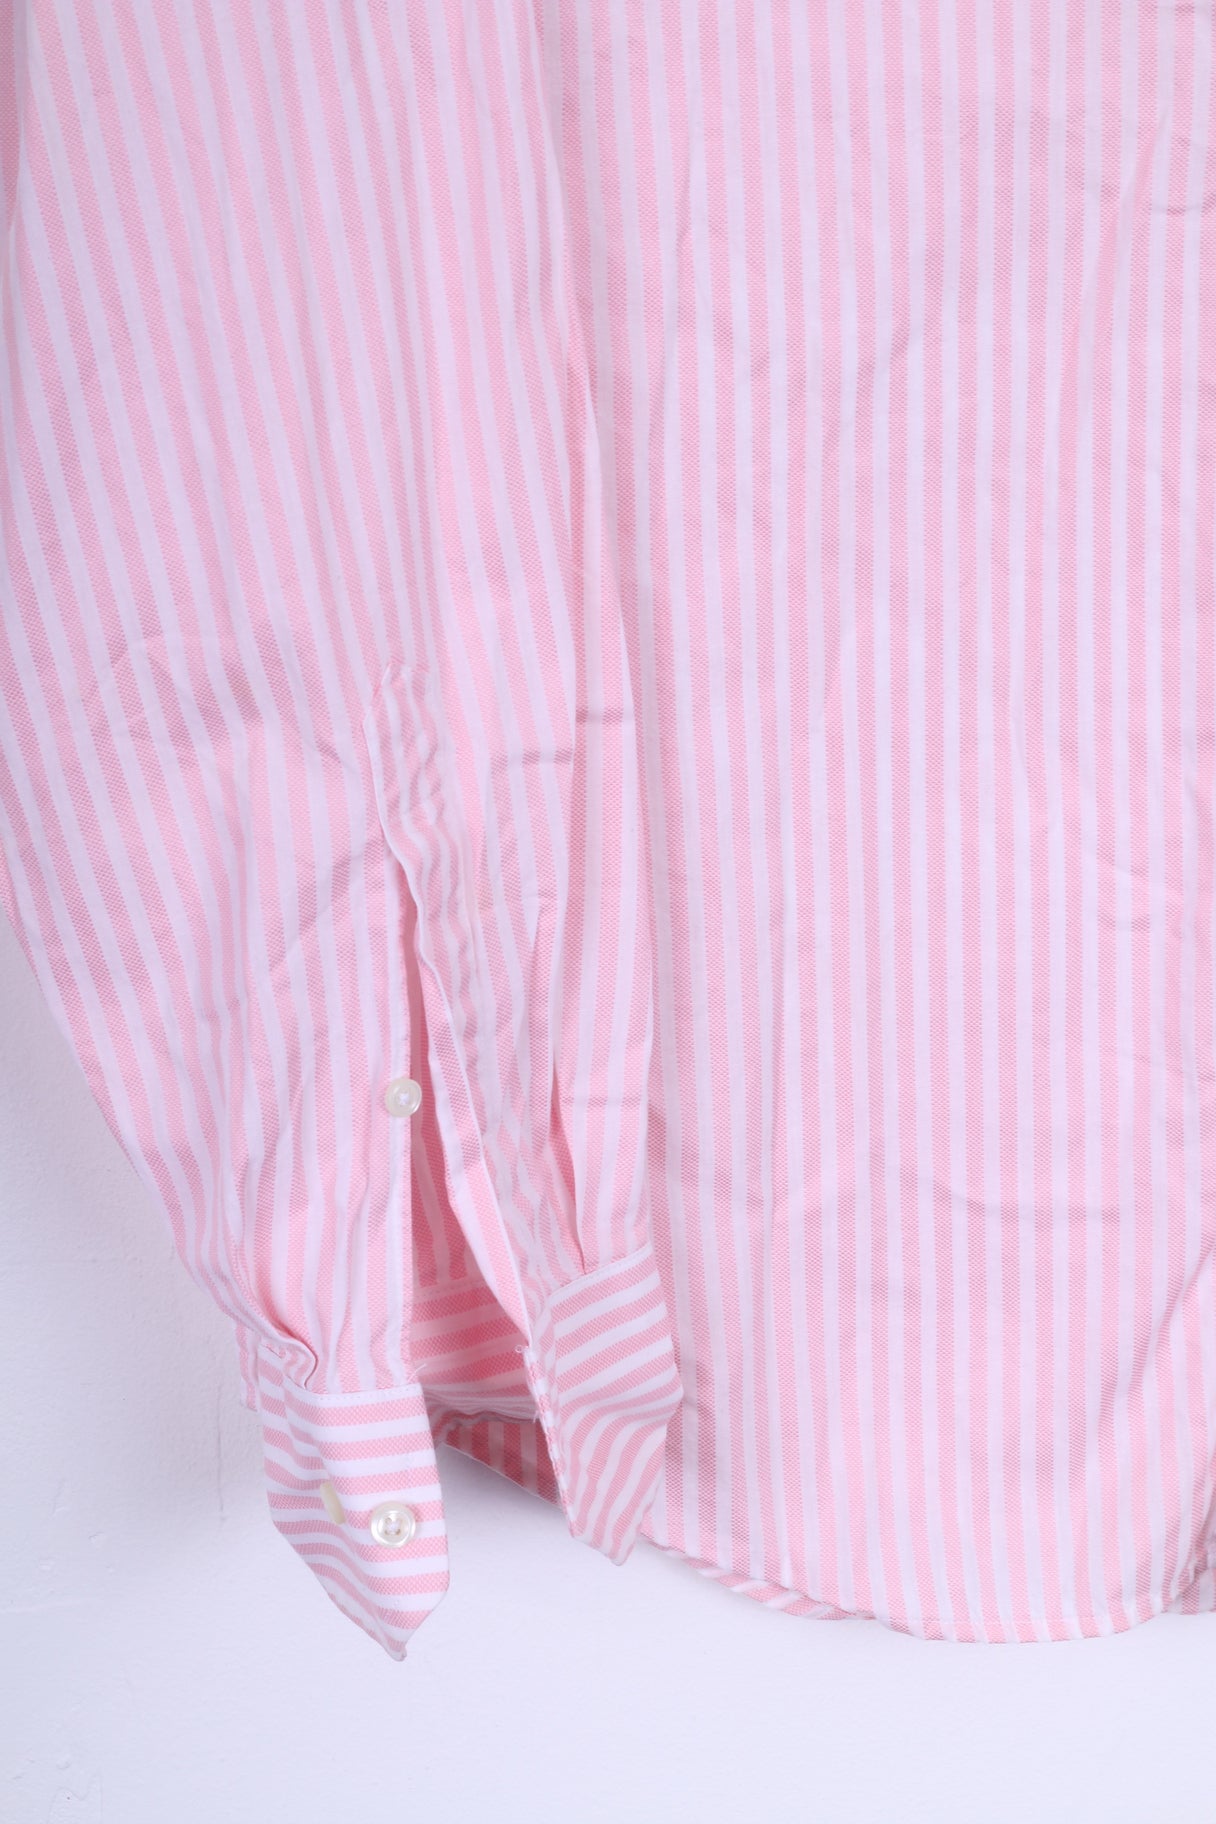 Strellson Mens 40 15 3/4 S Casual Shirt Cotton Pink Striped Long Sleeve